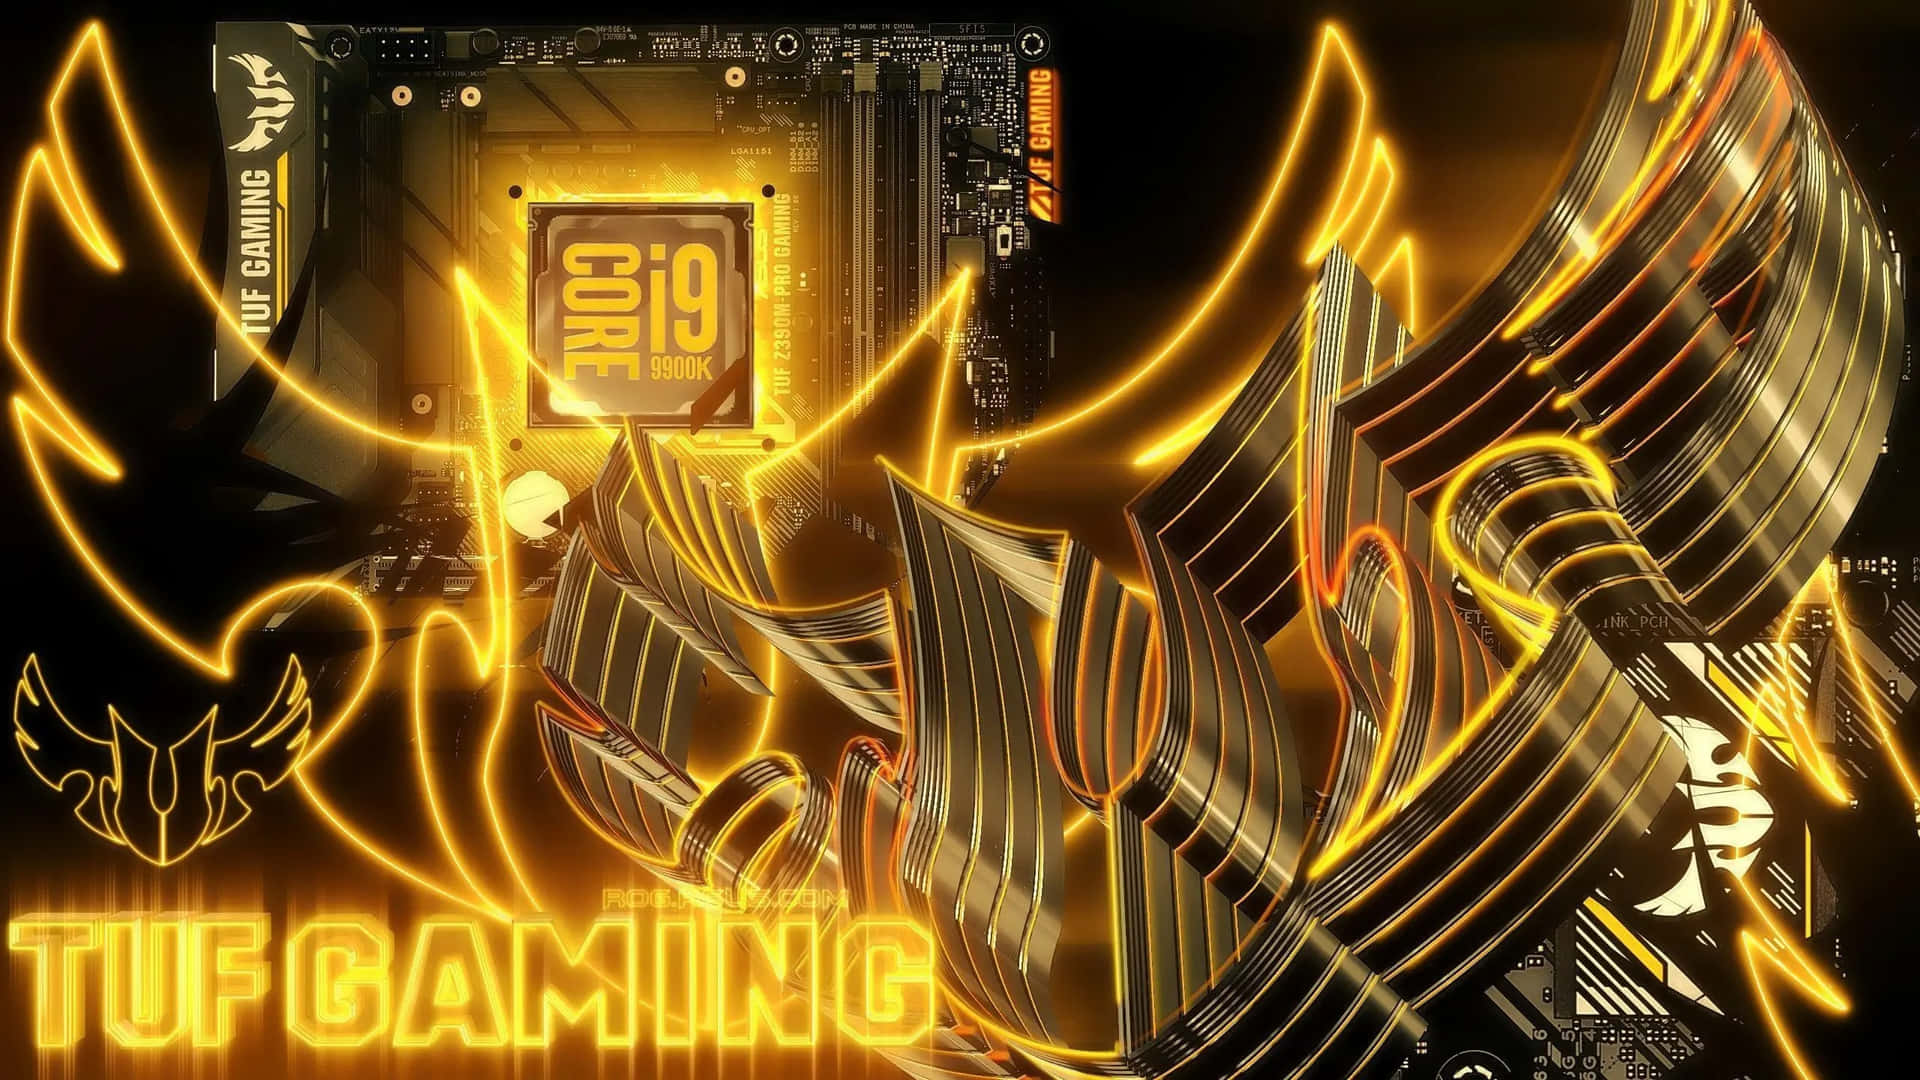 Asus T U F Gaming Motherboard Artwork Background